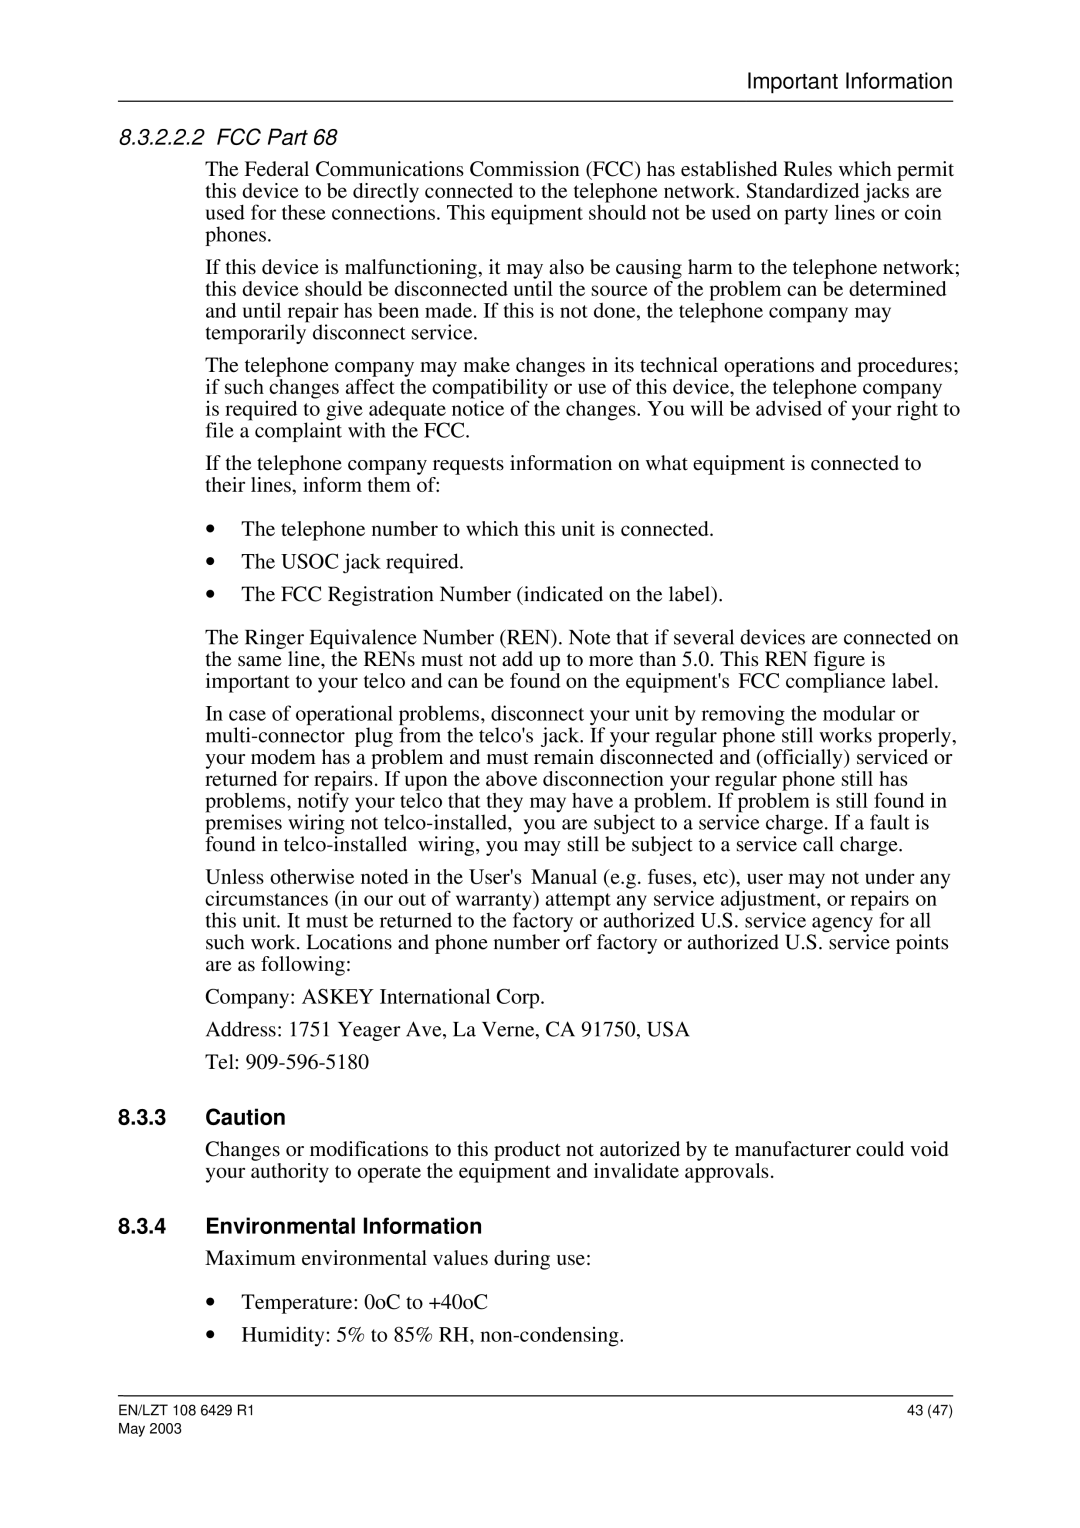 Ericsson HM121dp, HM121di manual Environmental Information 